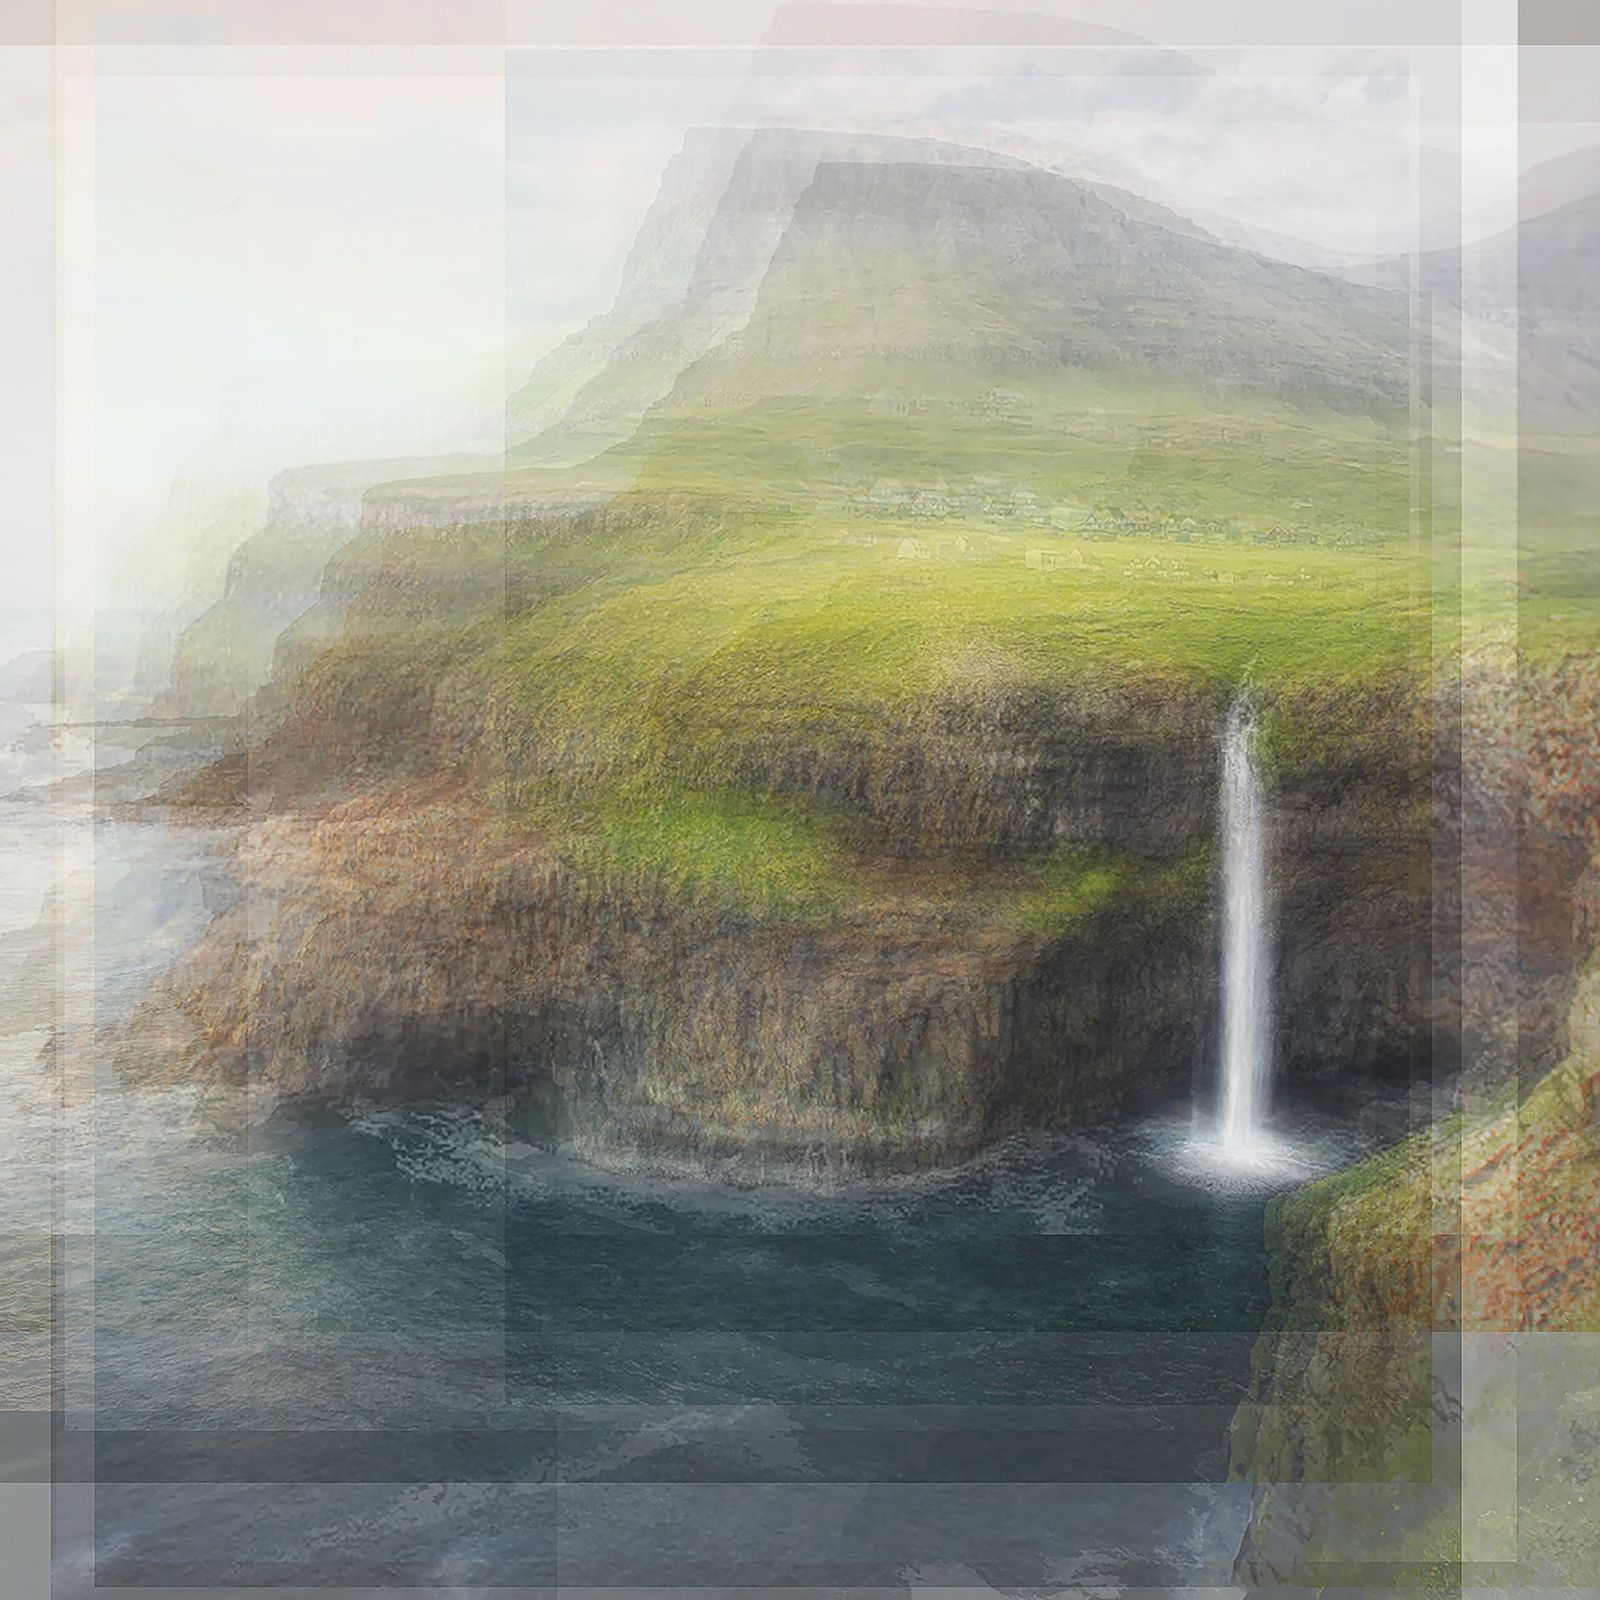 © Eija Mäkivuoti - Image from the The Unbearable Lightness of Giving a F**k – A Thousand Faroe Islands photography project